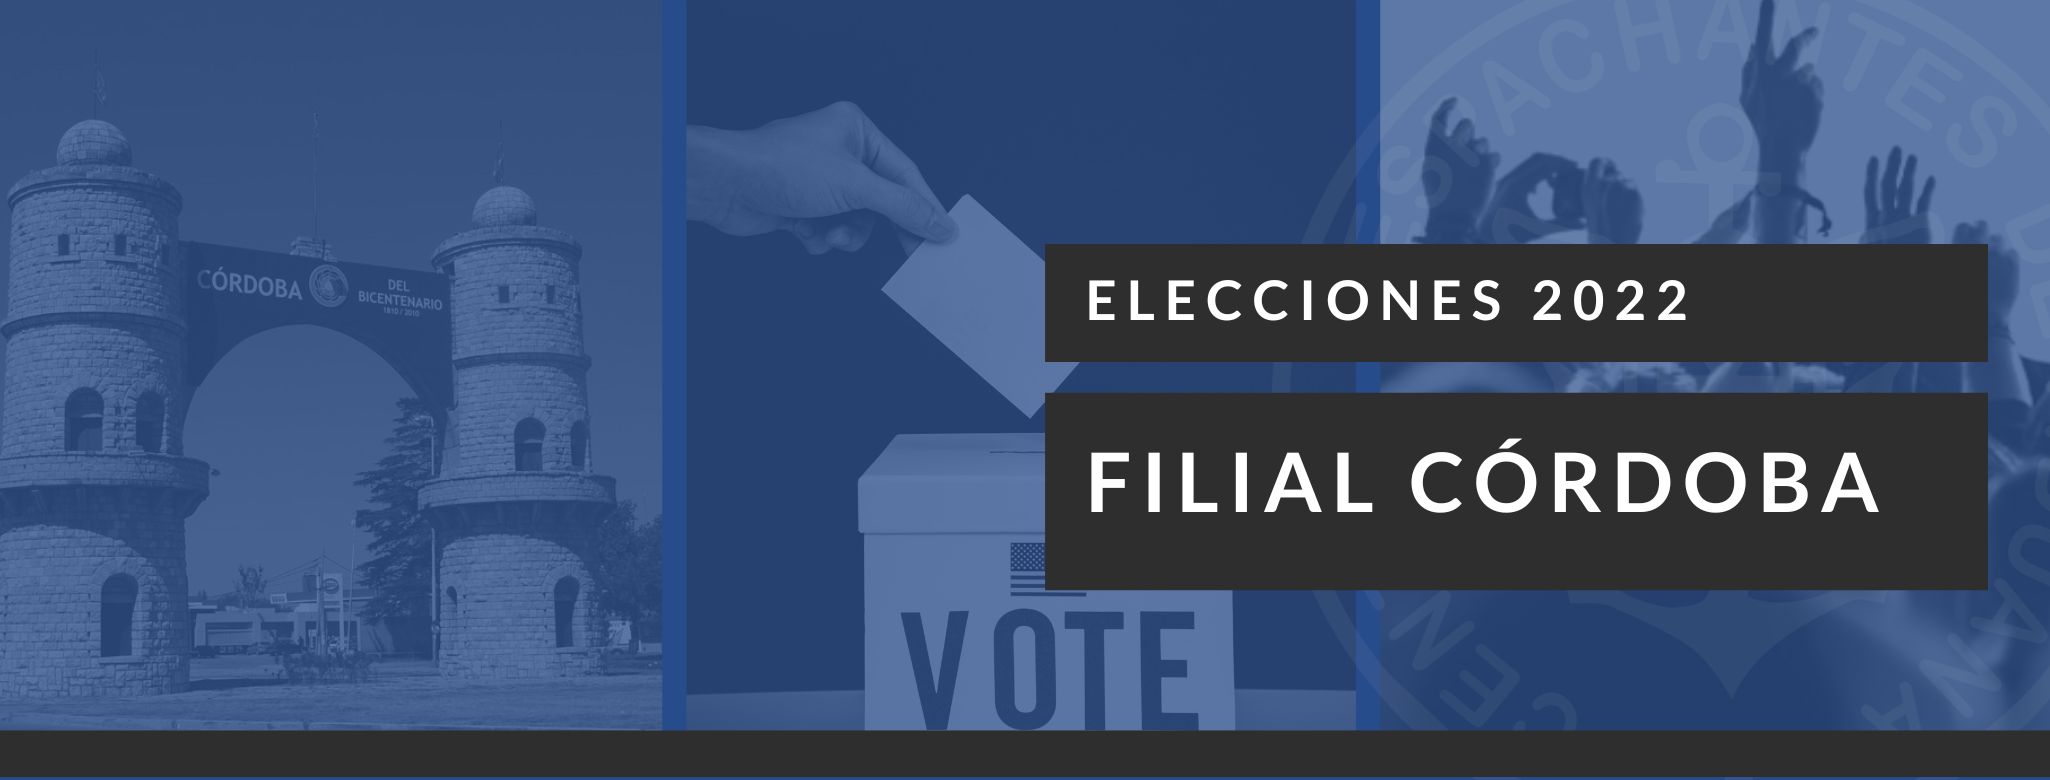 Filial Córdoba - Elecciones 2022